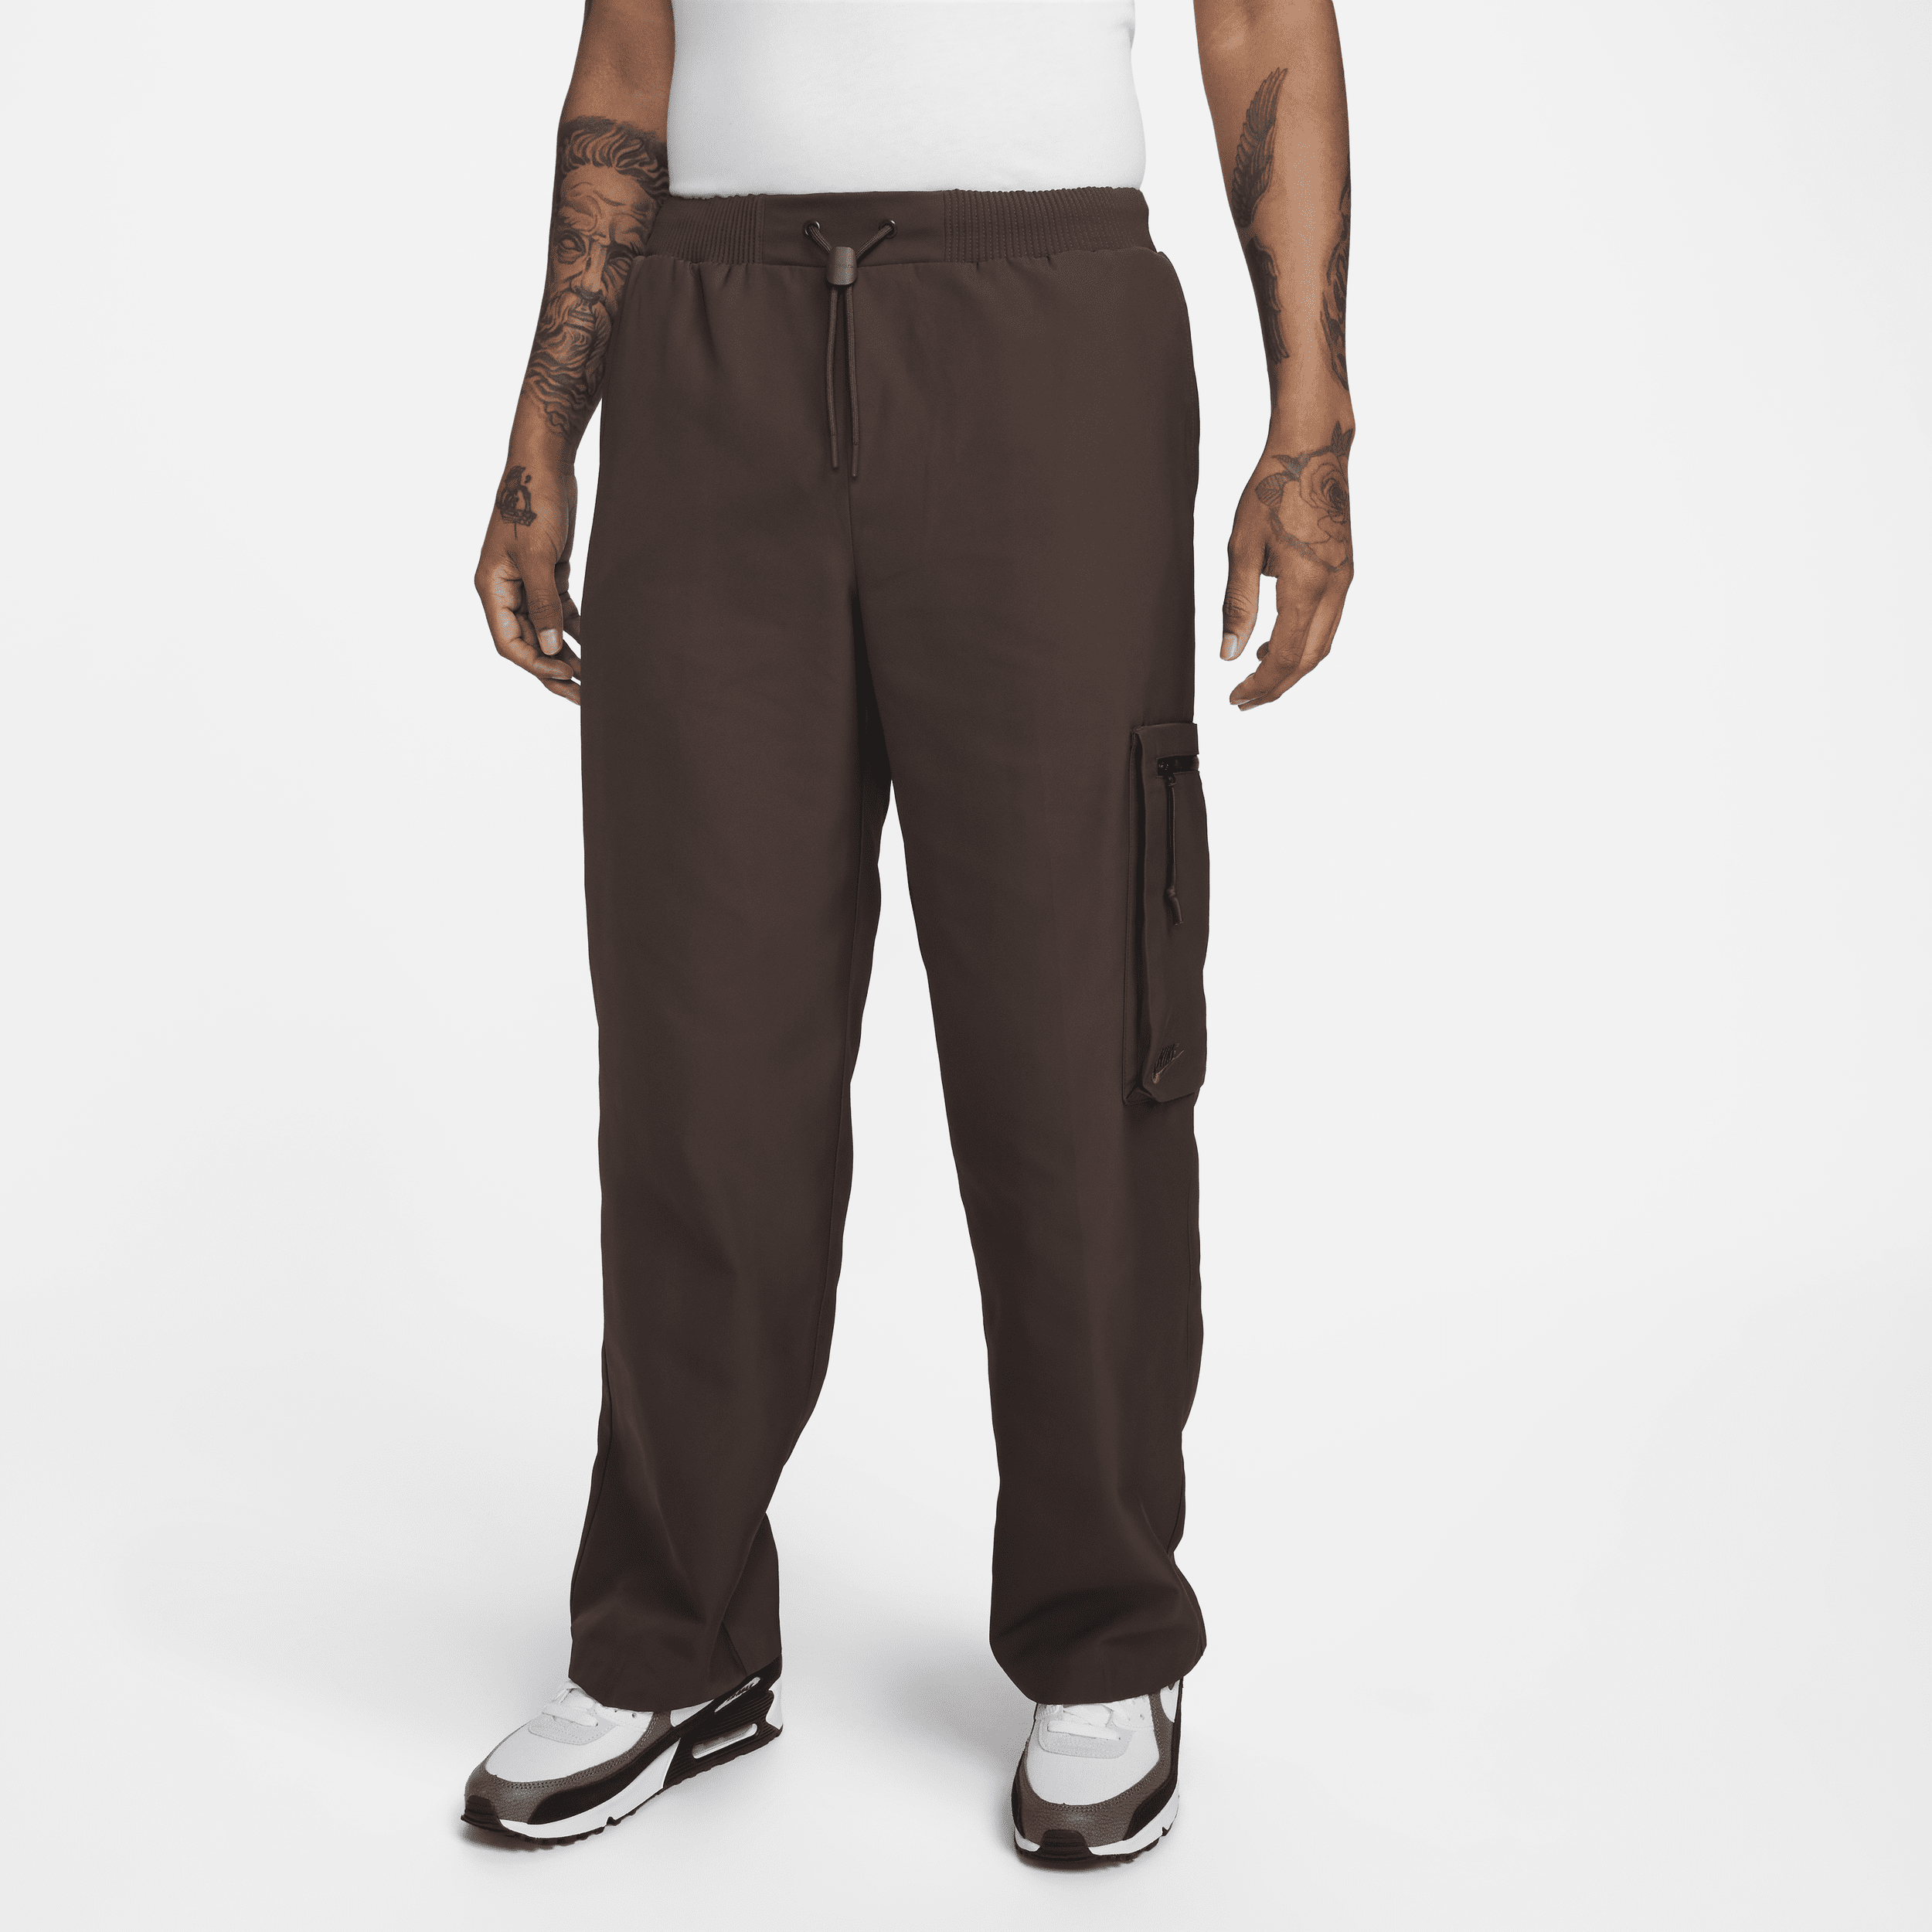 Nike Sportswear Tech Pack Pantalón funcional de tejido Woven - Hombre - Marrón